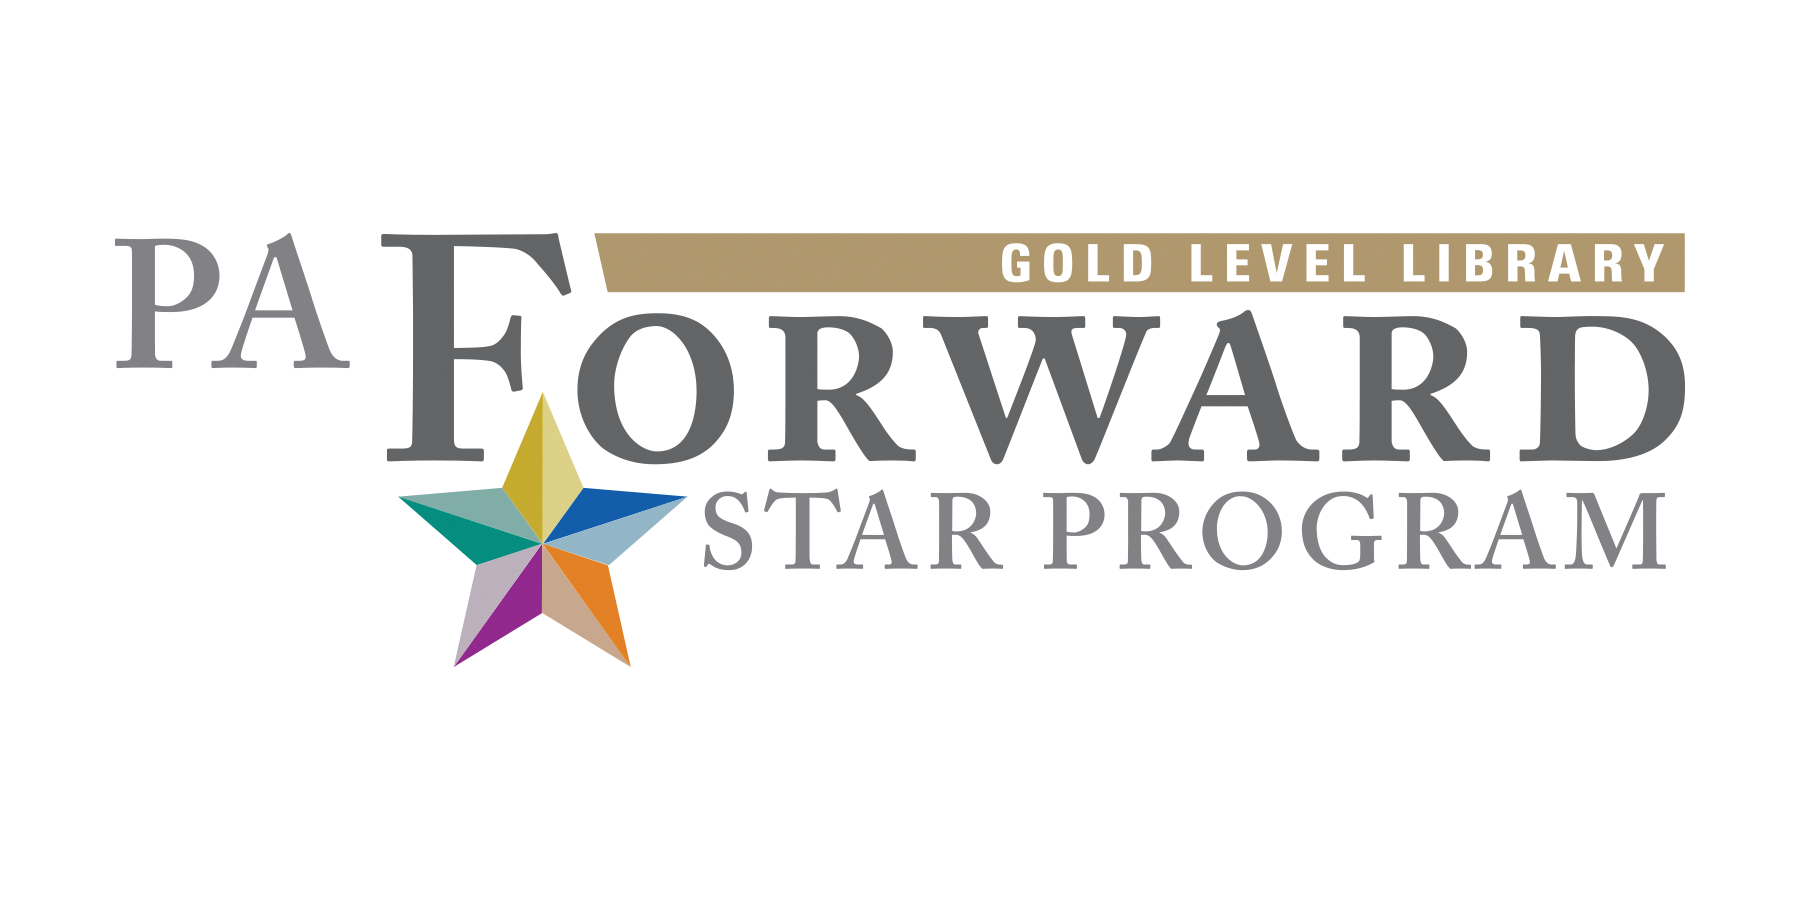 Pa Forward Star Program (Gold Level)